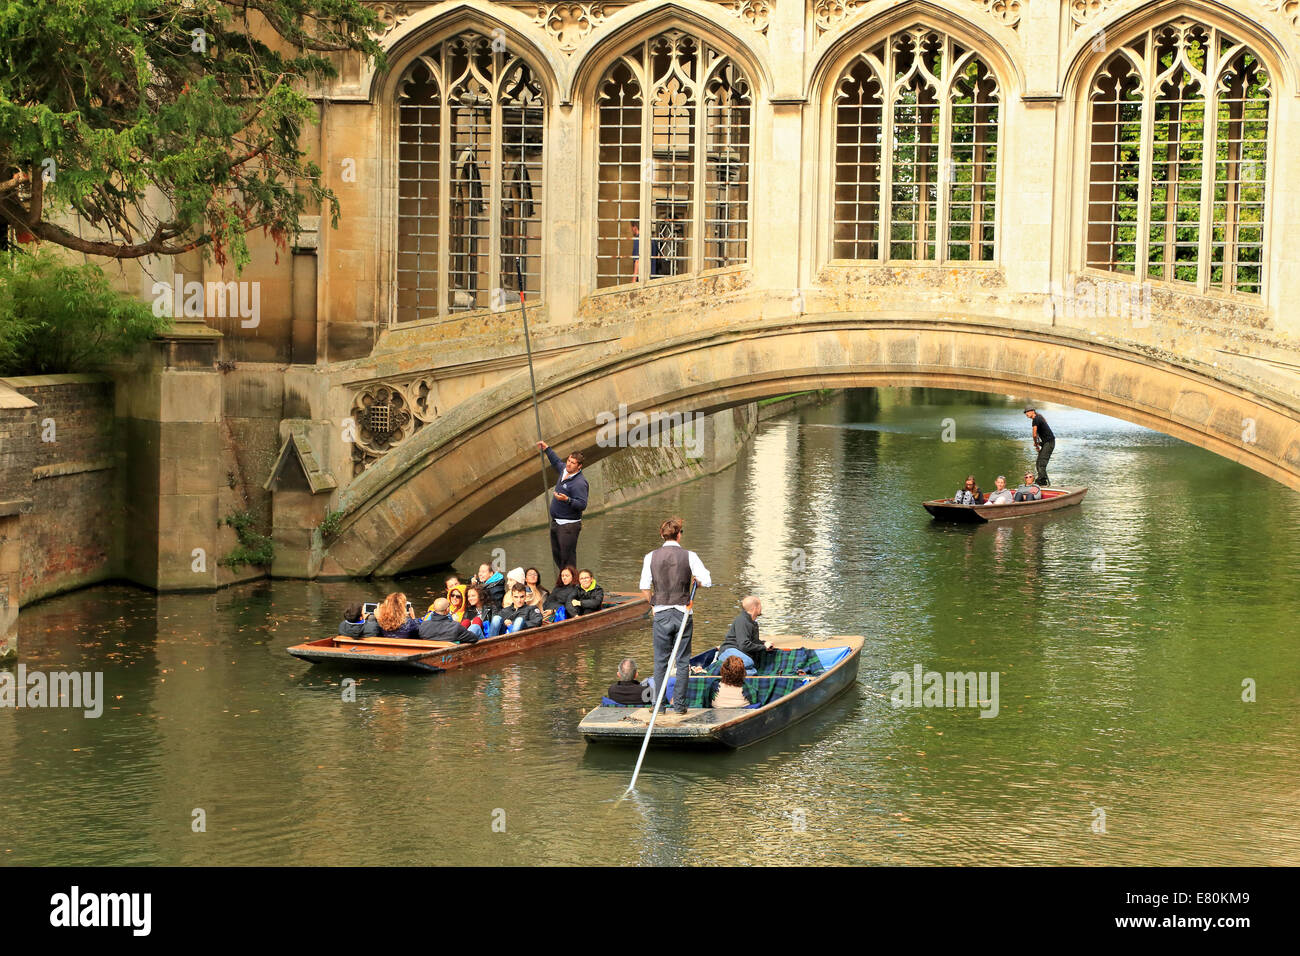 Punting under the Bridge of Sighs, St John's college, Cambridge, UK. Stock Photo